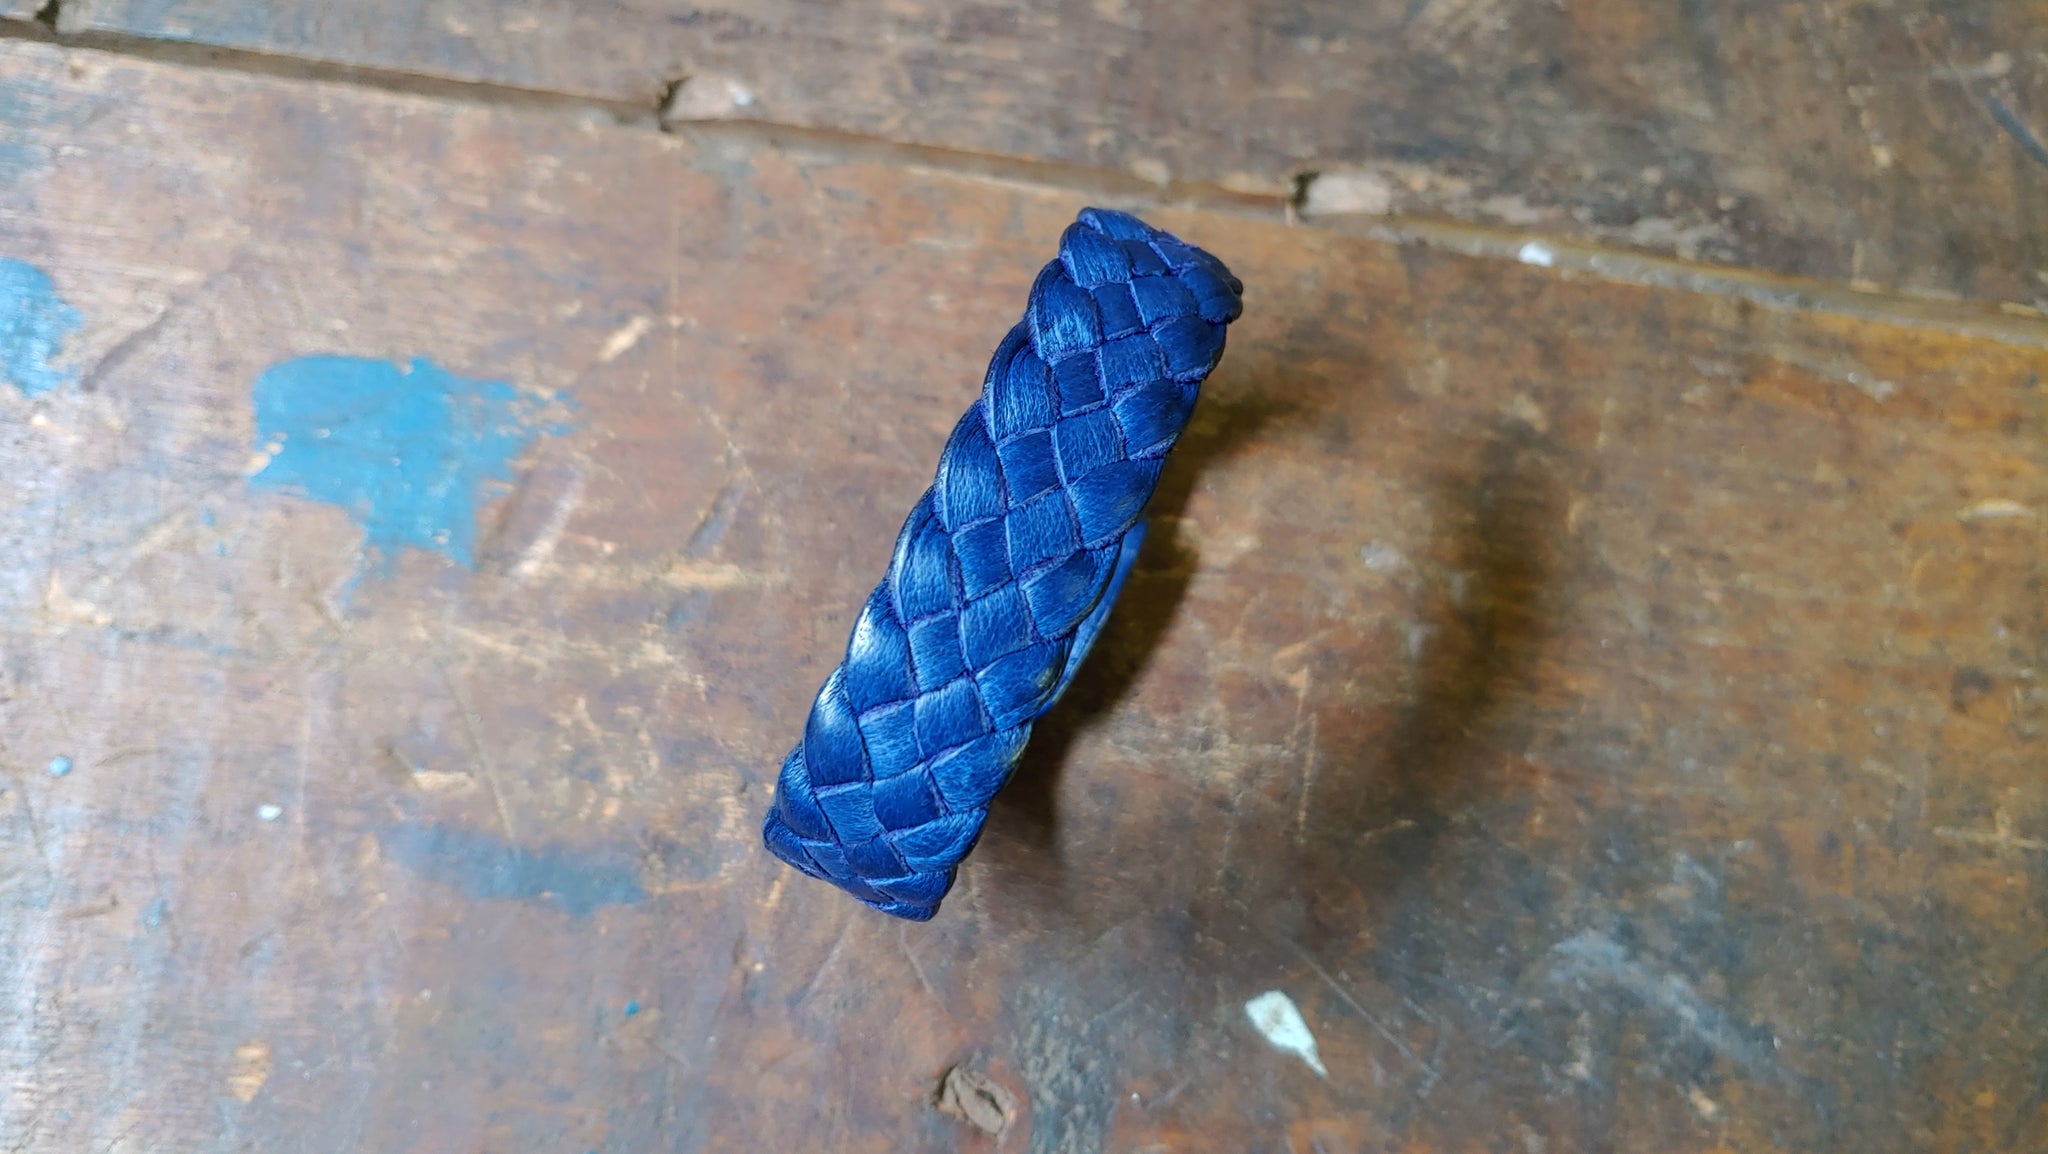 SAPPHIRE BLUE Sara Braided Leather Friendship Bracelet - 6.0 WRIST SIZE - Ready to Ship